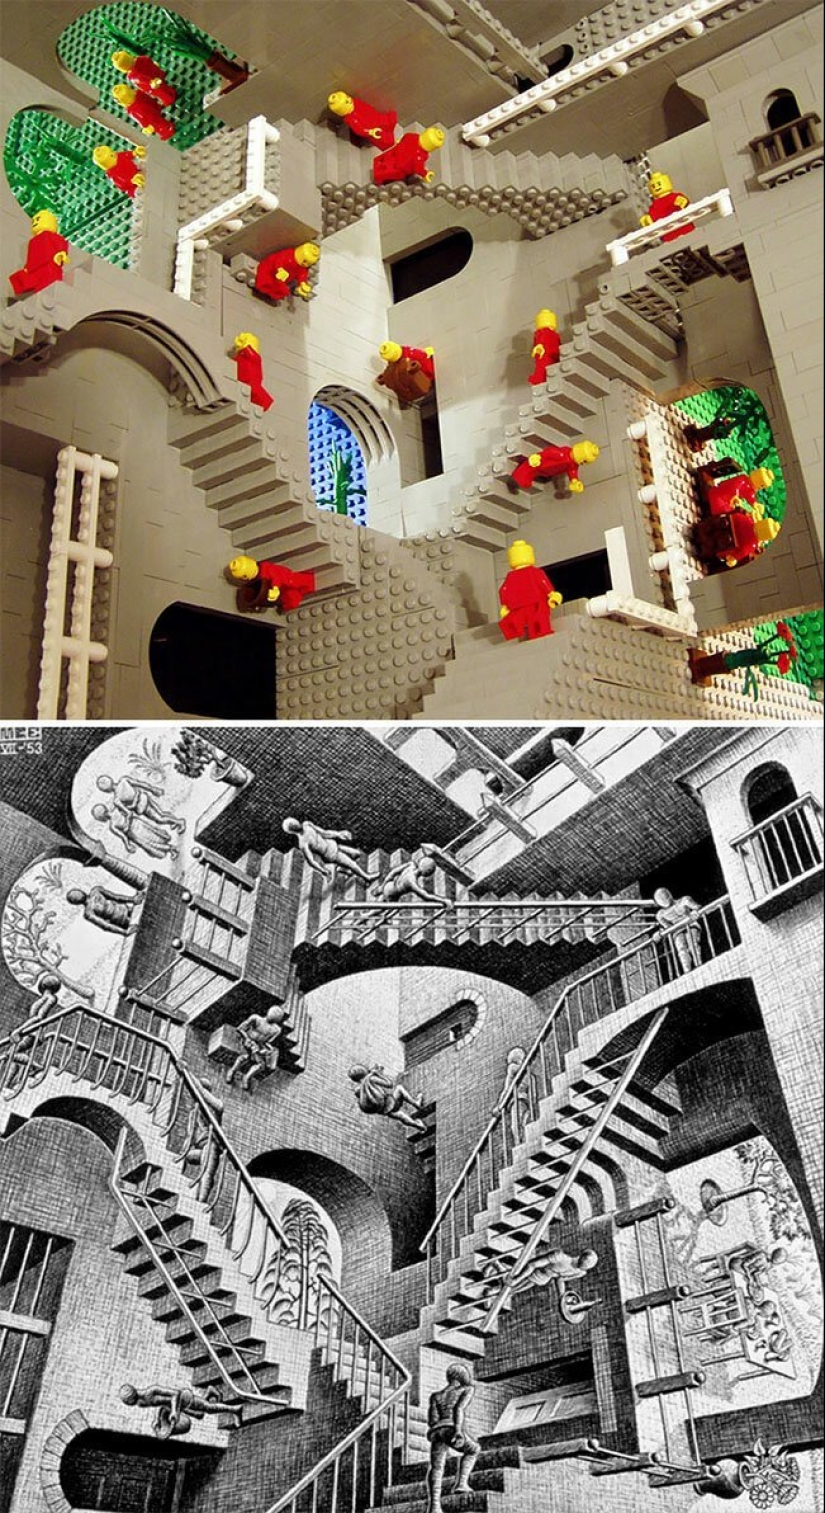 Obras maestras de arte, sobrannye de LEGO